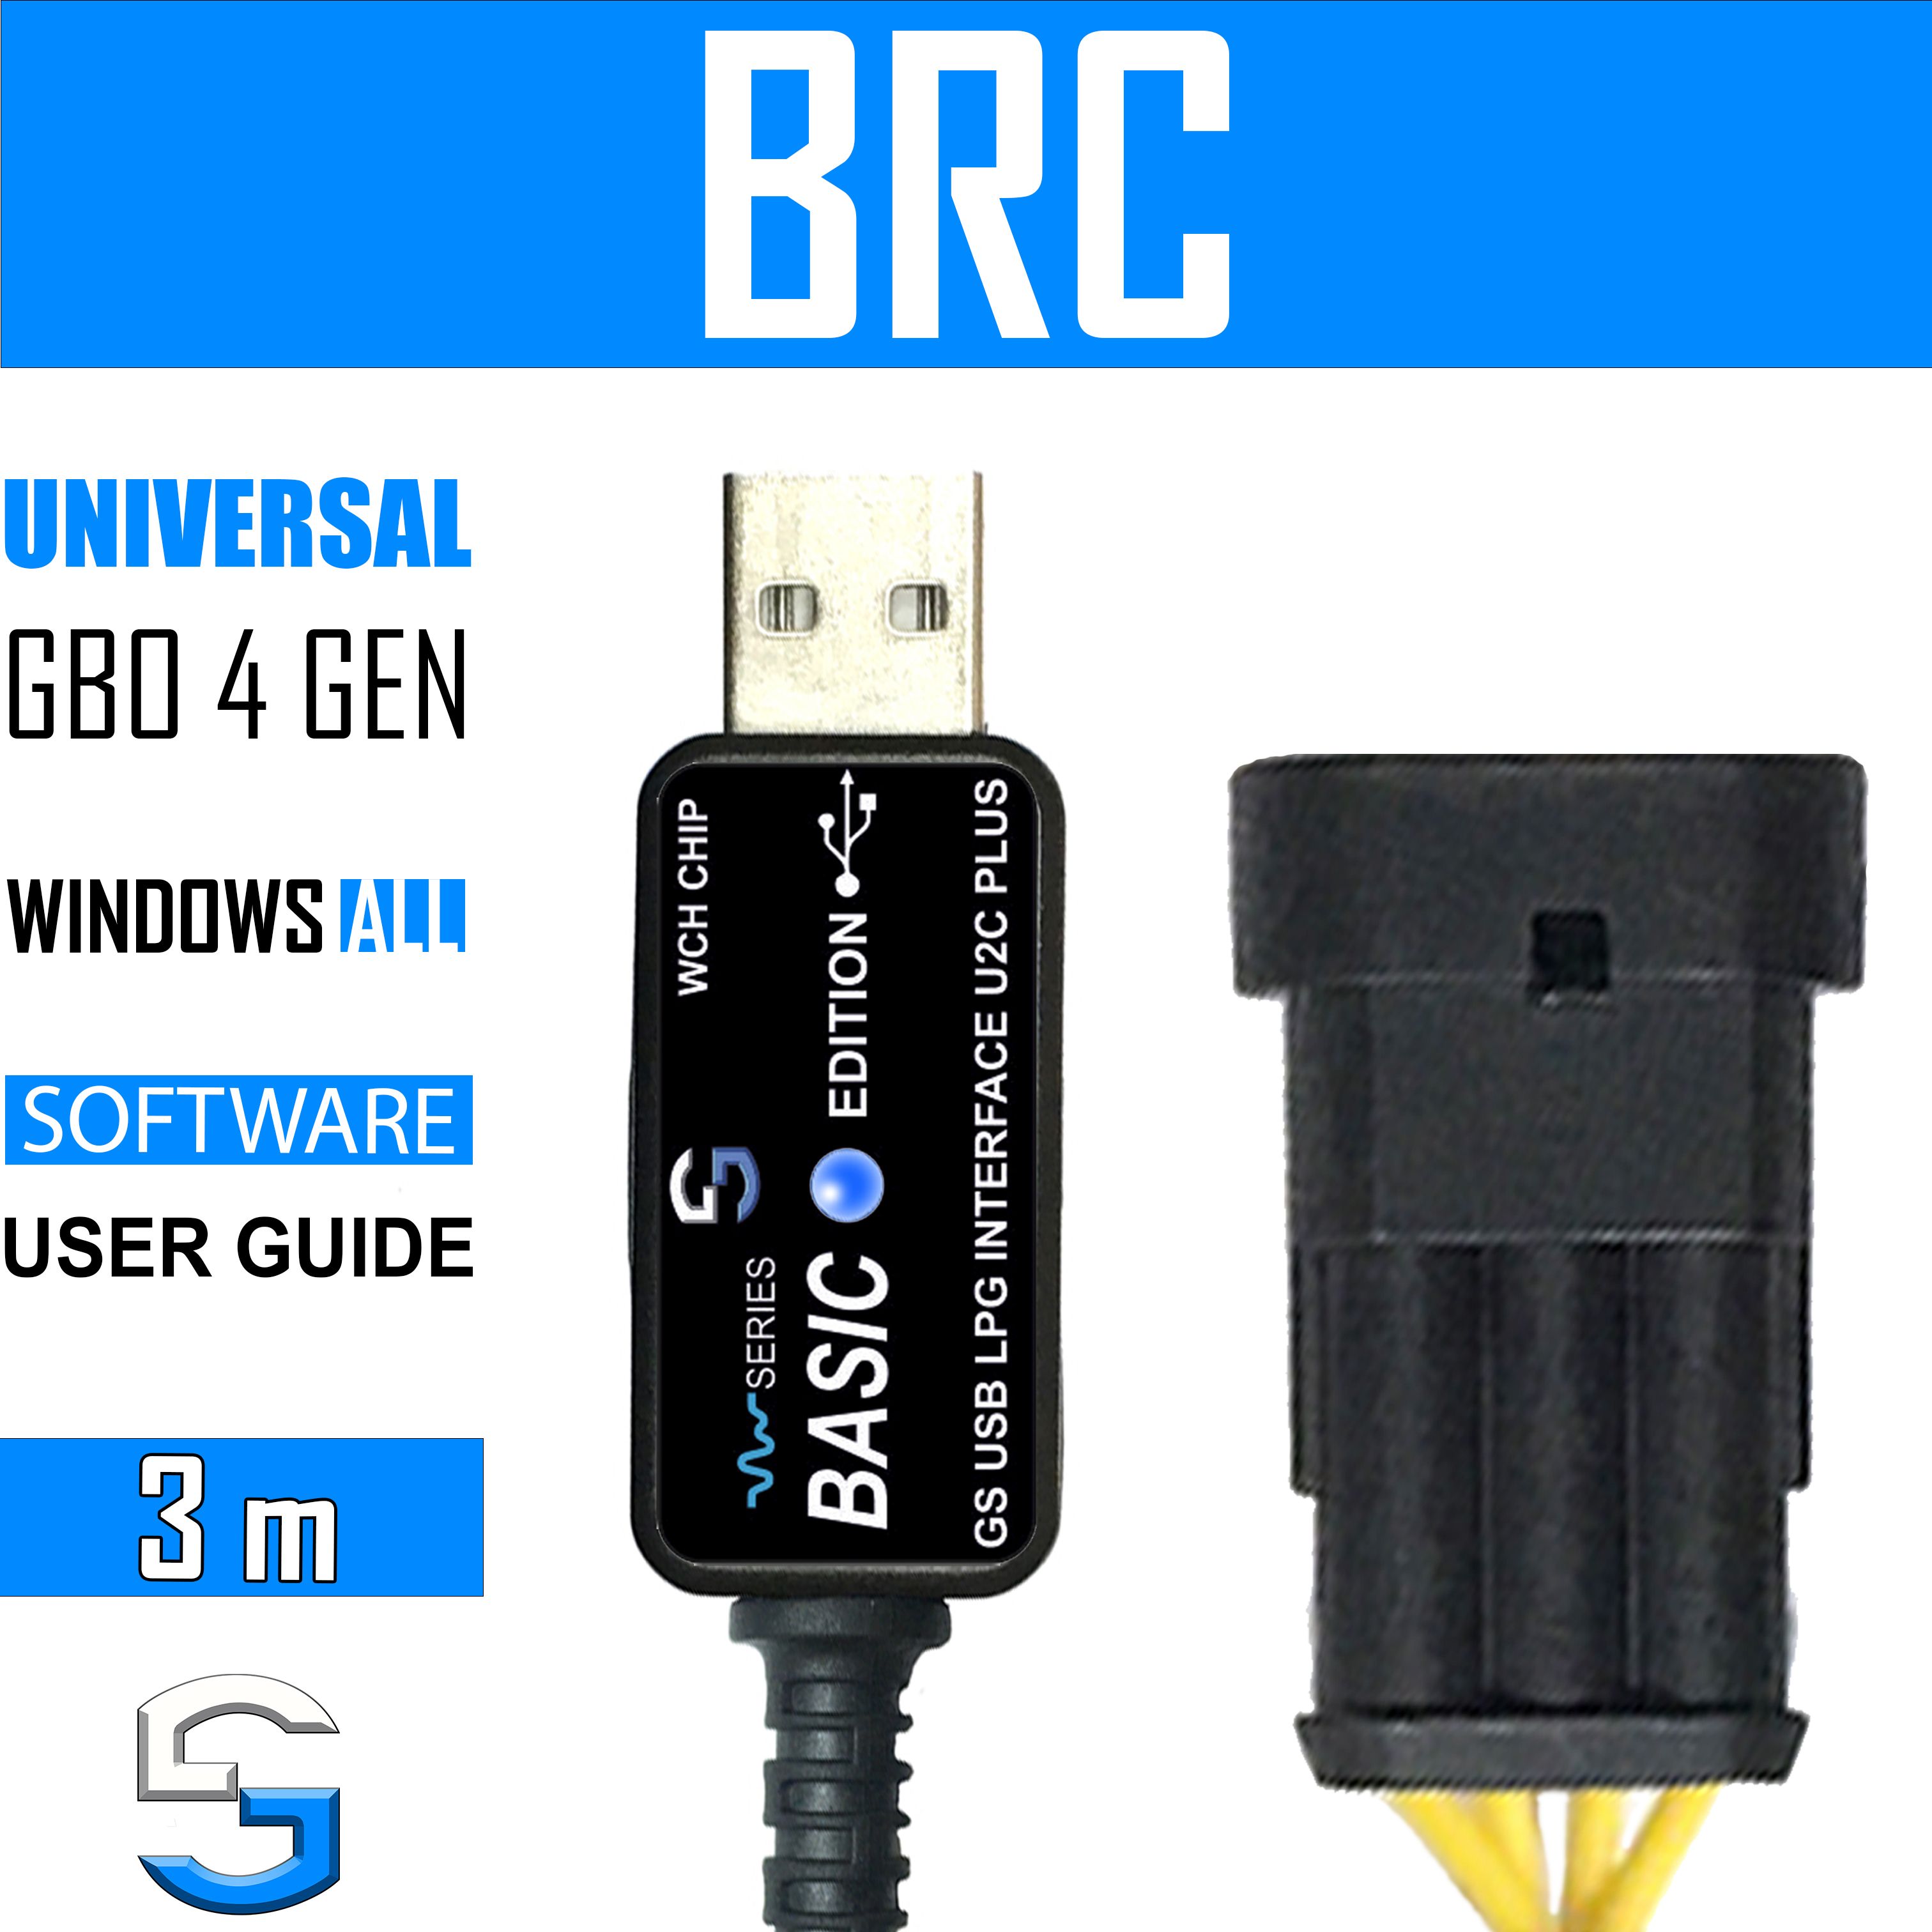 Адаптер для ГБО RS232 (COM) BRC